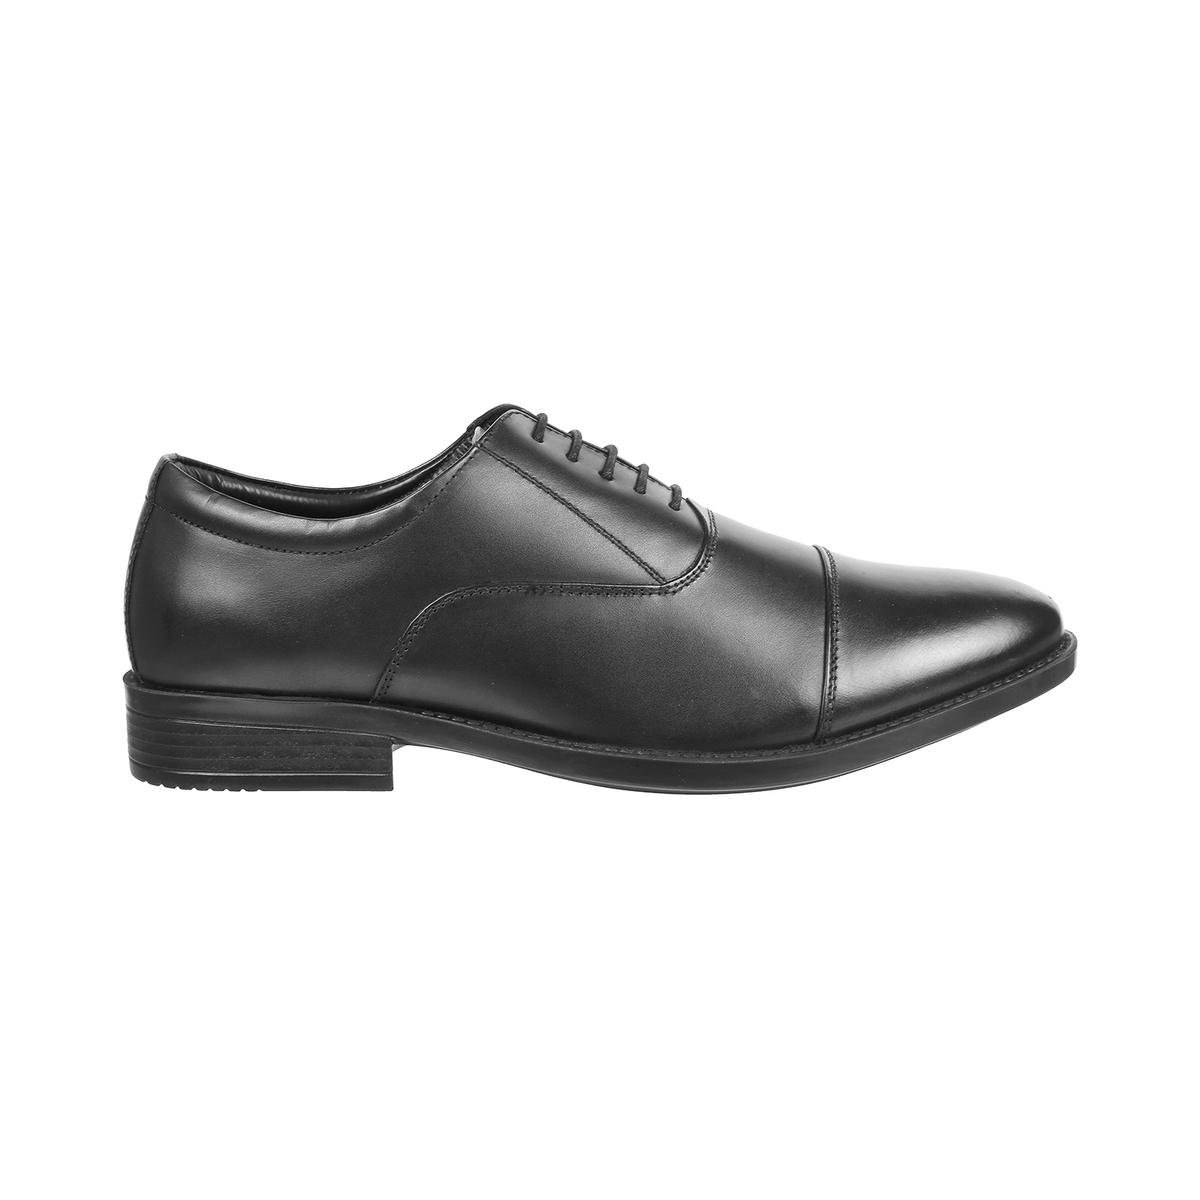 Buy Metro Men Black Formal Oxford Online | SKU: 19-19-11-40 - Metro Shoes